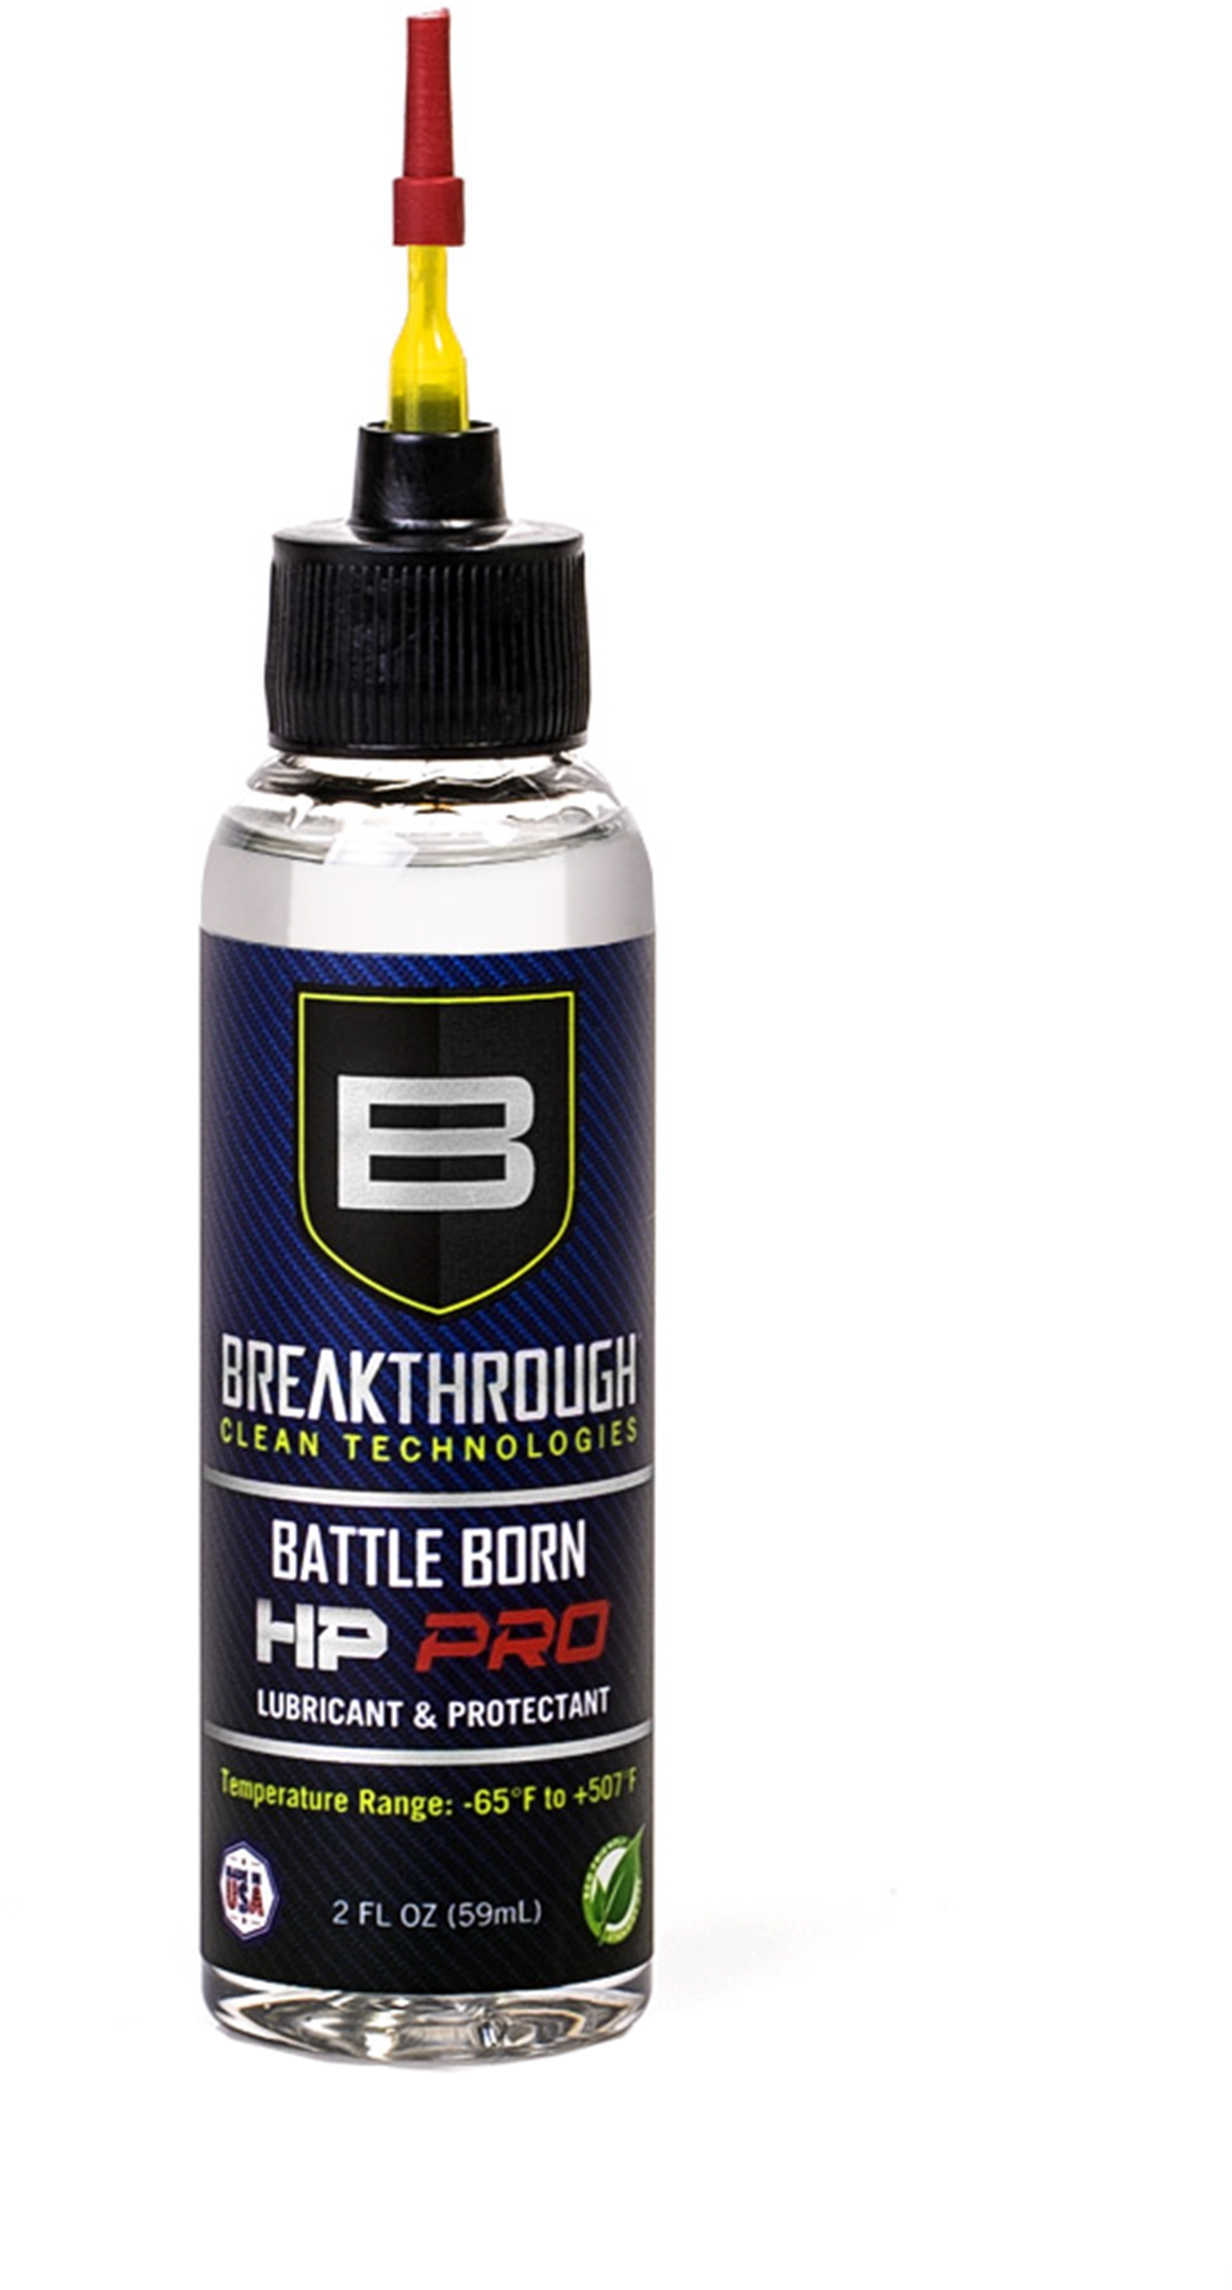 Breakthrough Clean Battle Born HP Pro Lube and Protectant Gun Oil 2 oz